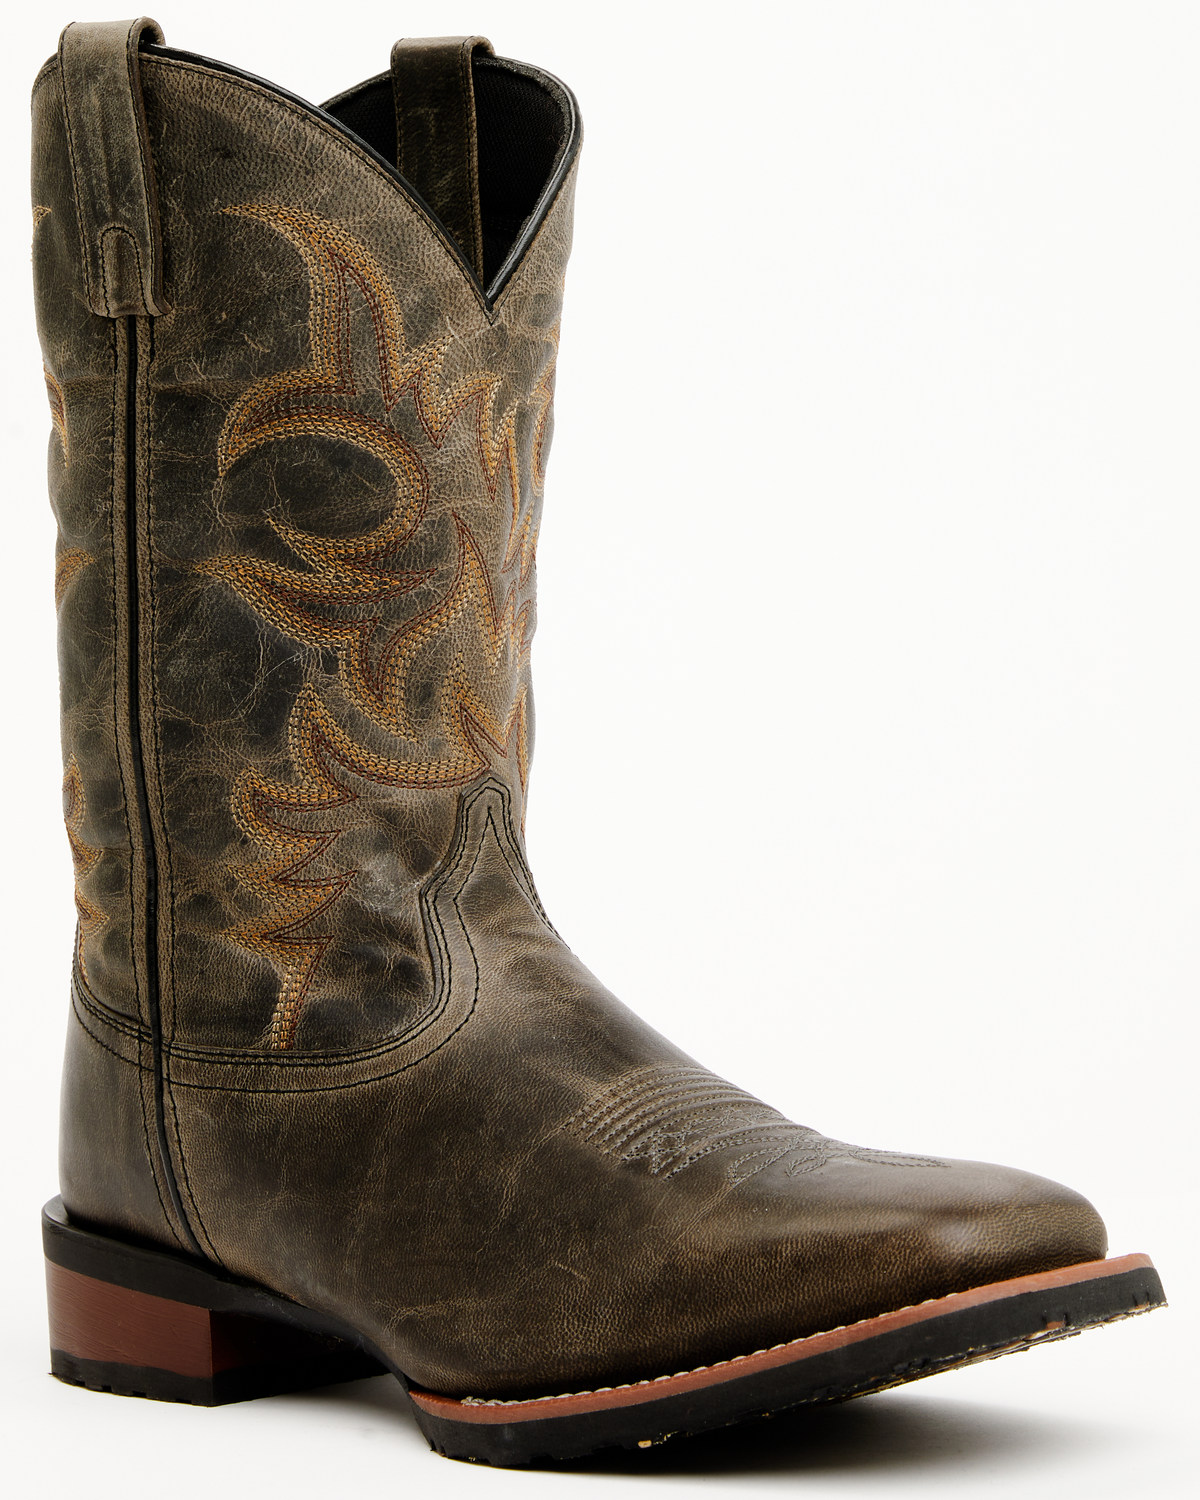 Laredo Men's 11" Western Boots - Broad Square Toe